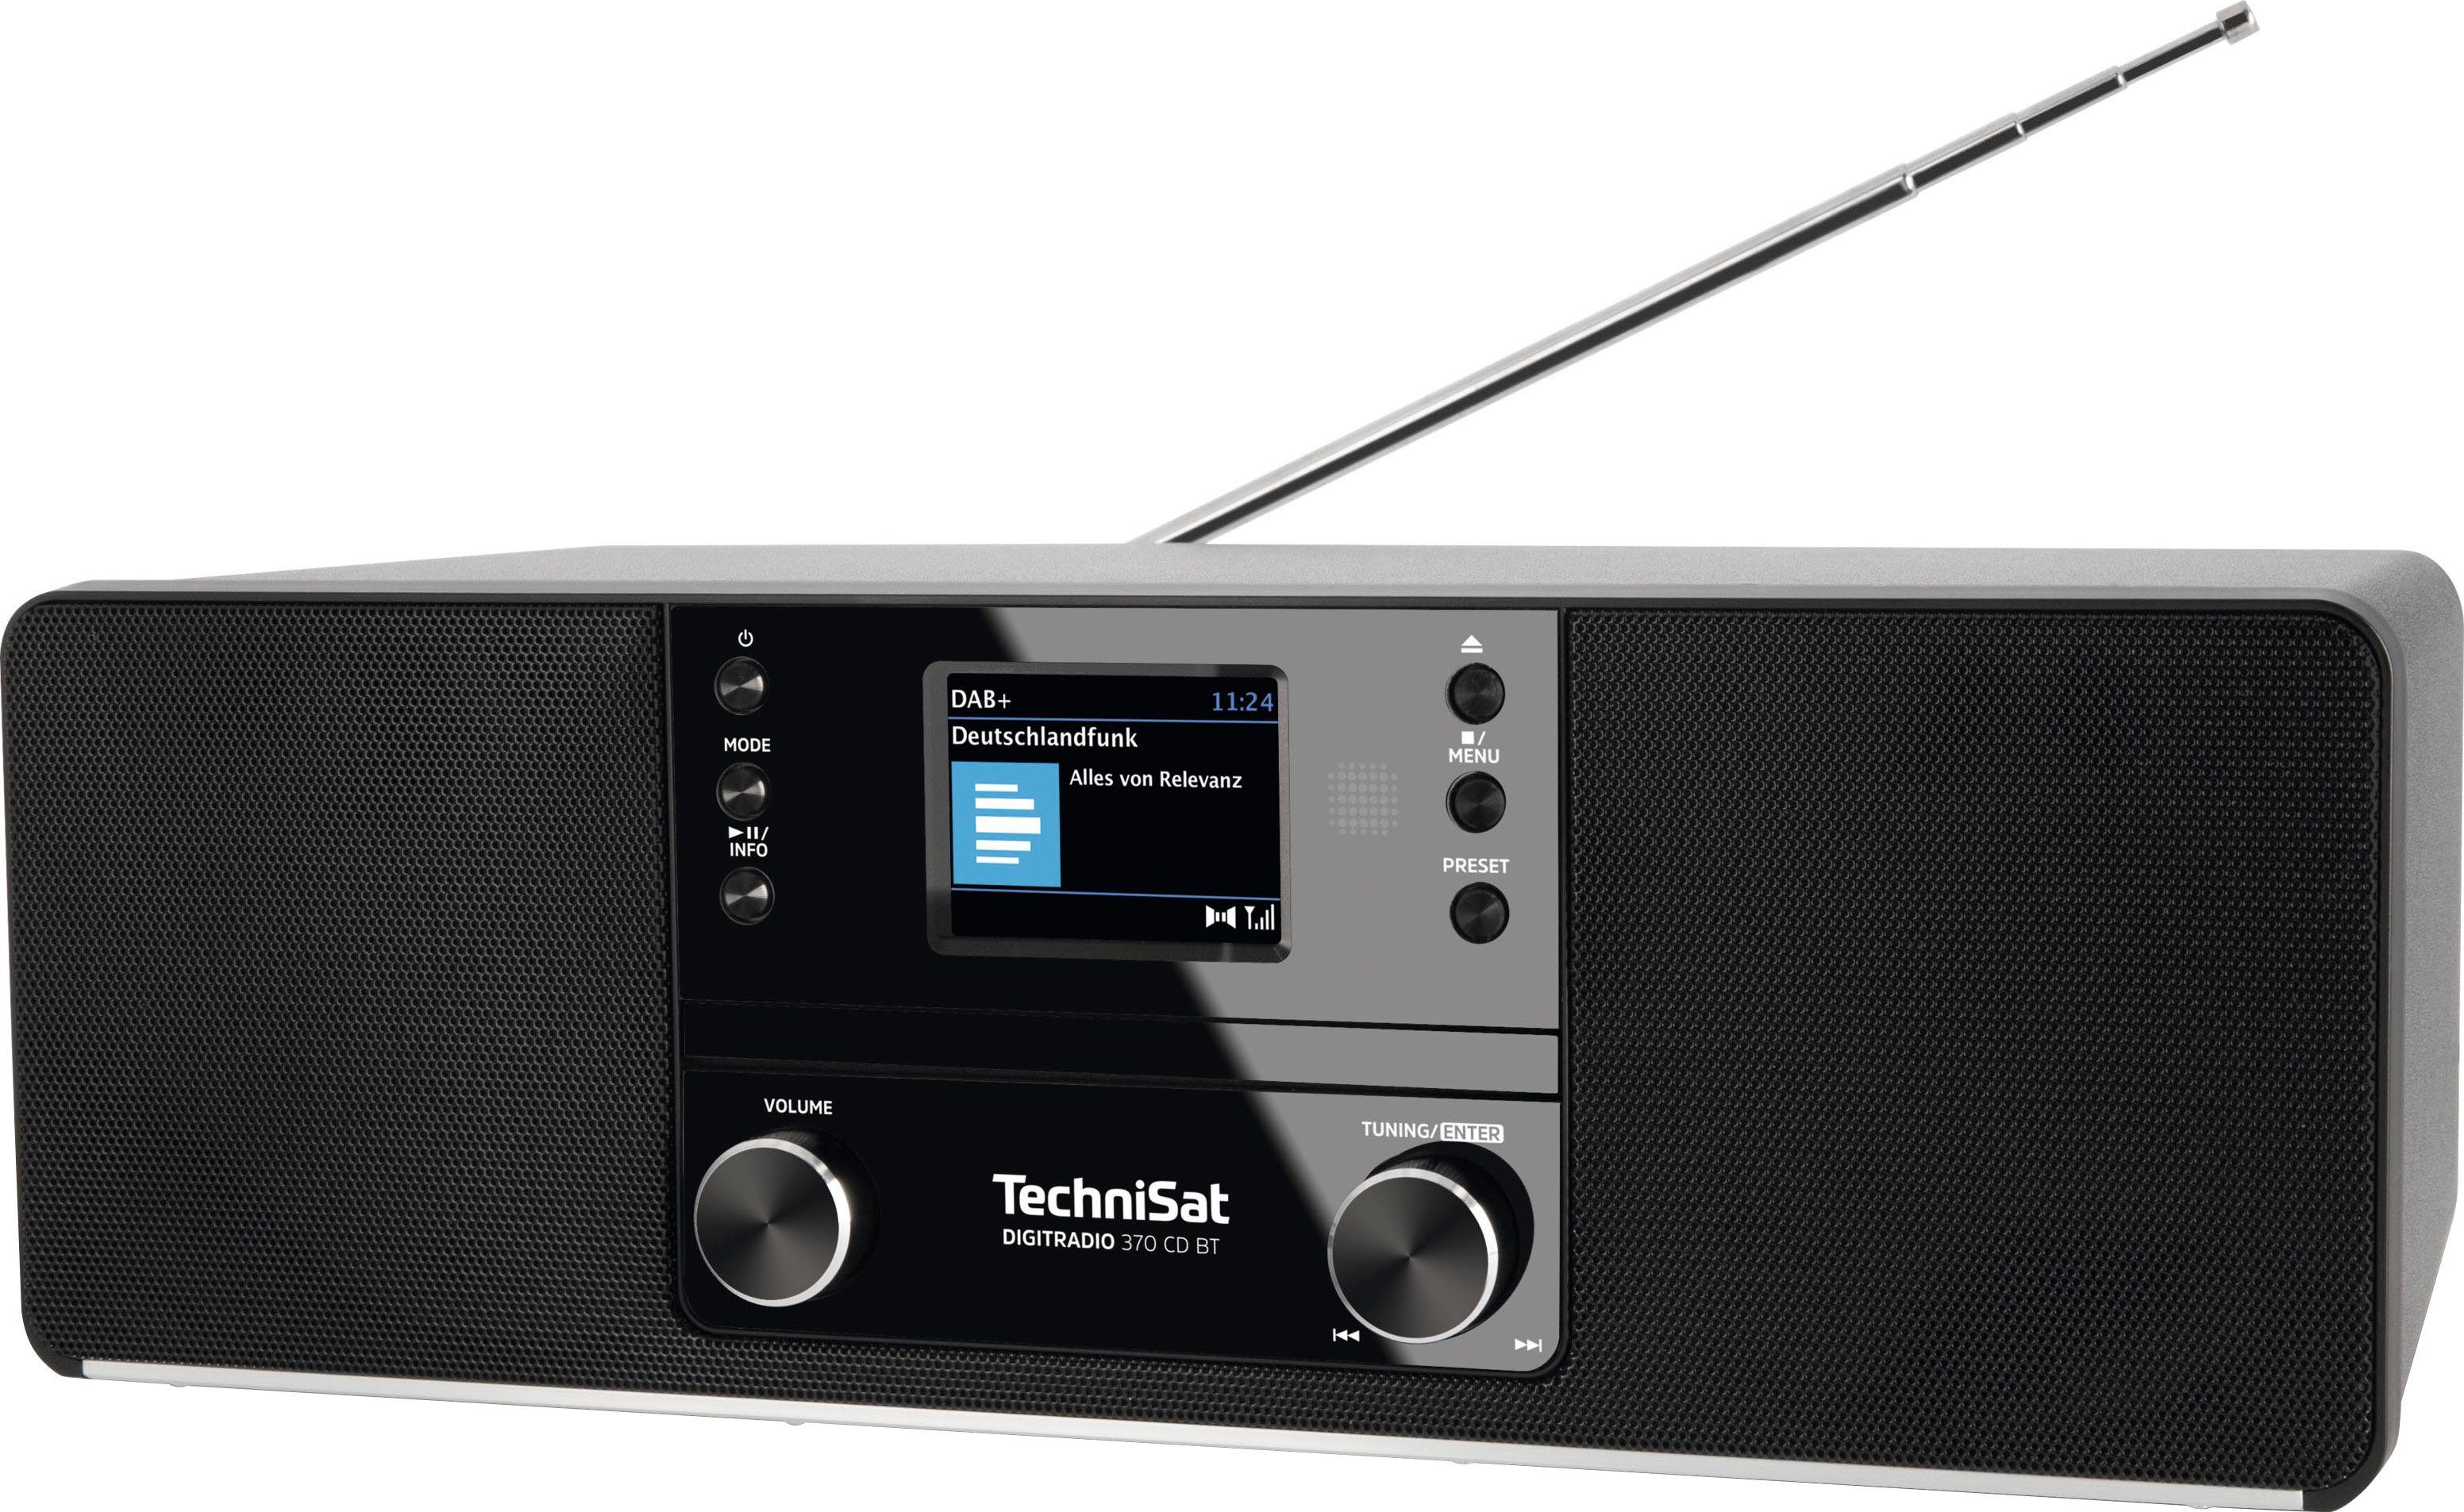 DIGITRADIO 370 (DAB) W) (DAB), UKW TechniSat schwarz 10 (Digitalradio Digitalradio BT RDS, CD mit